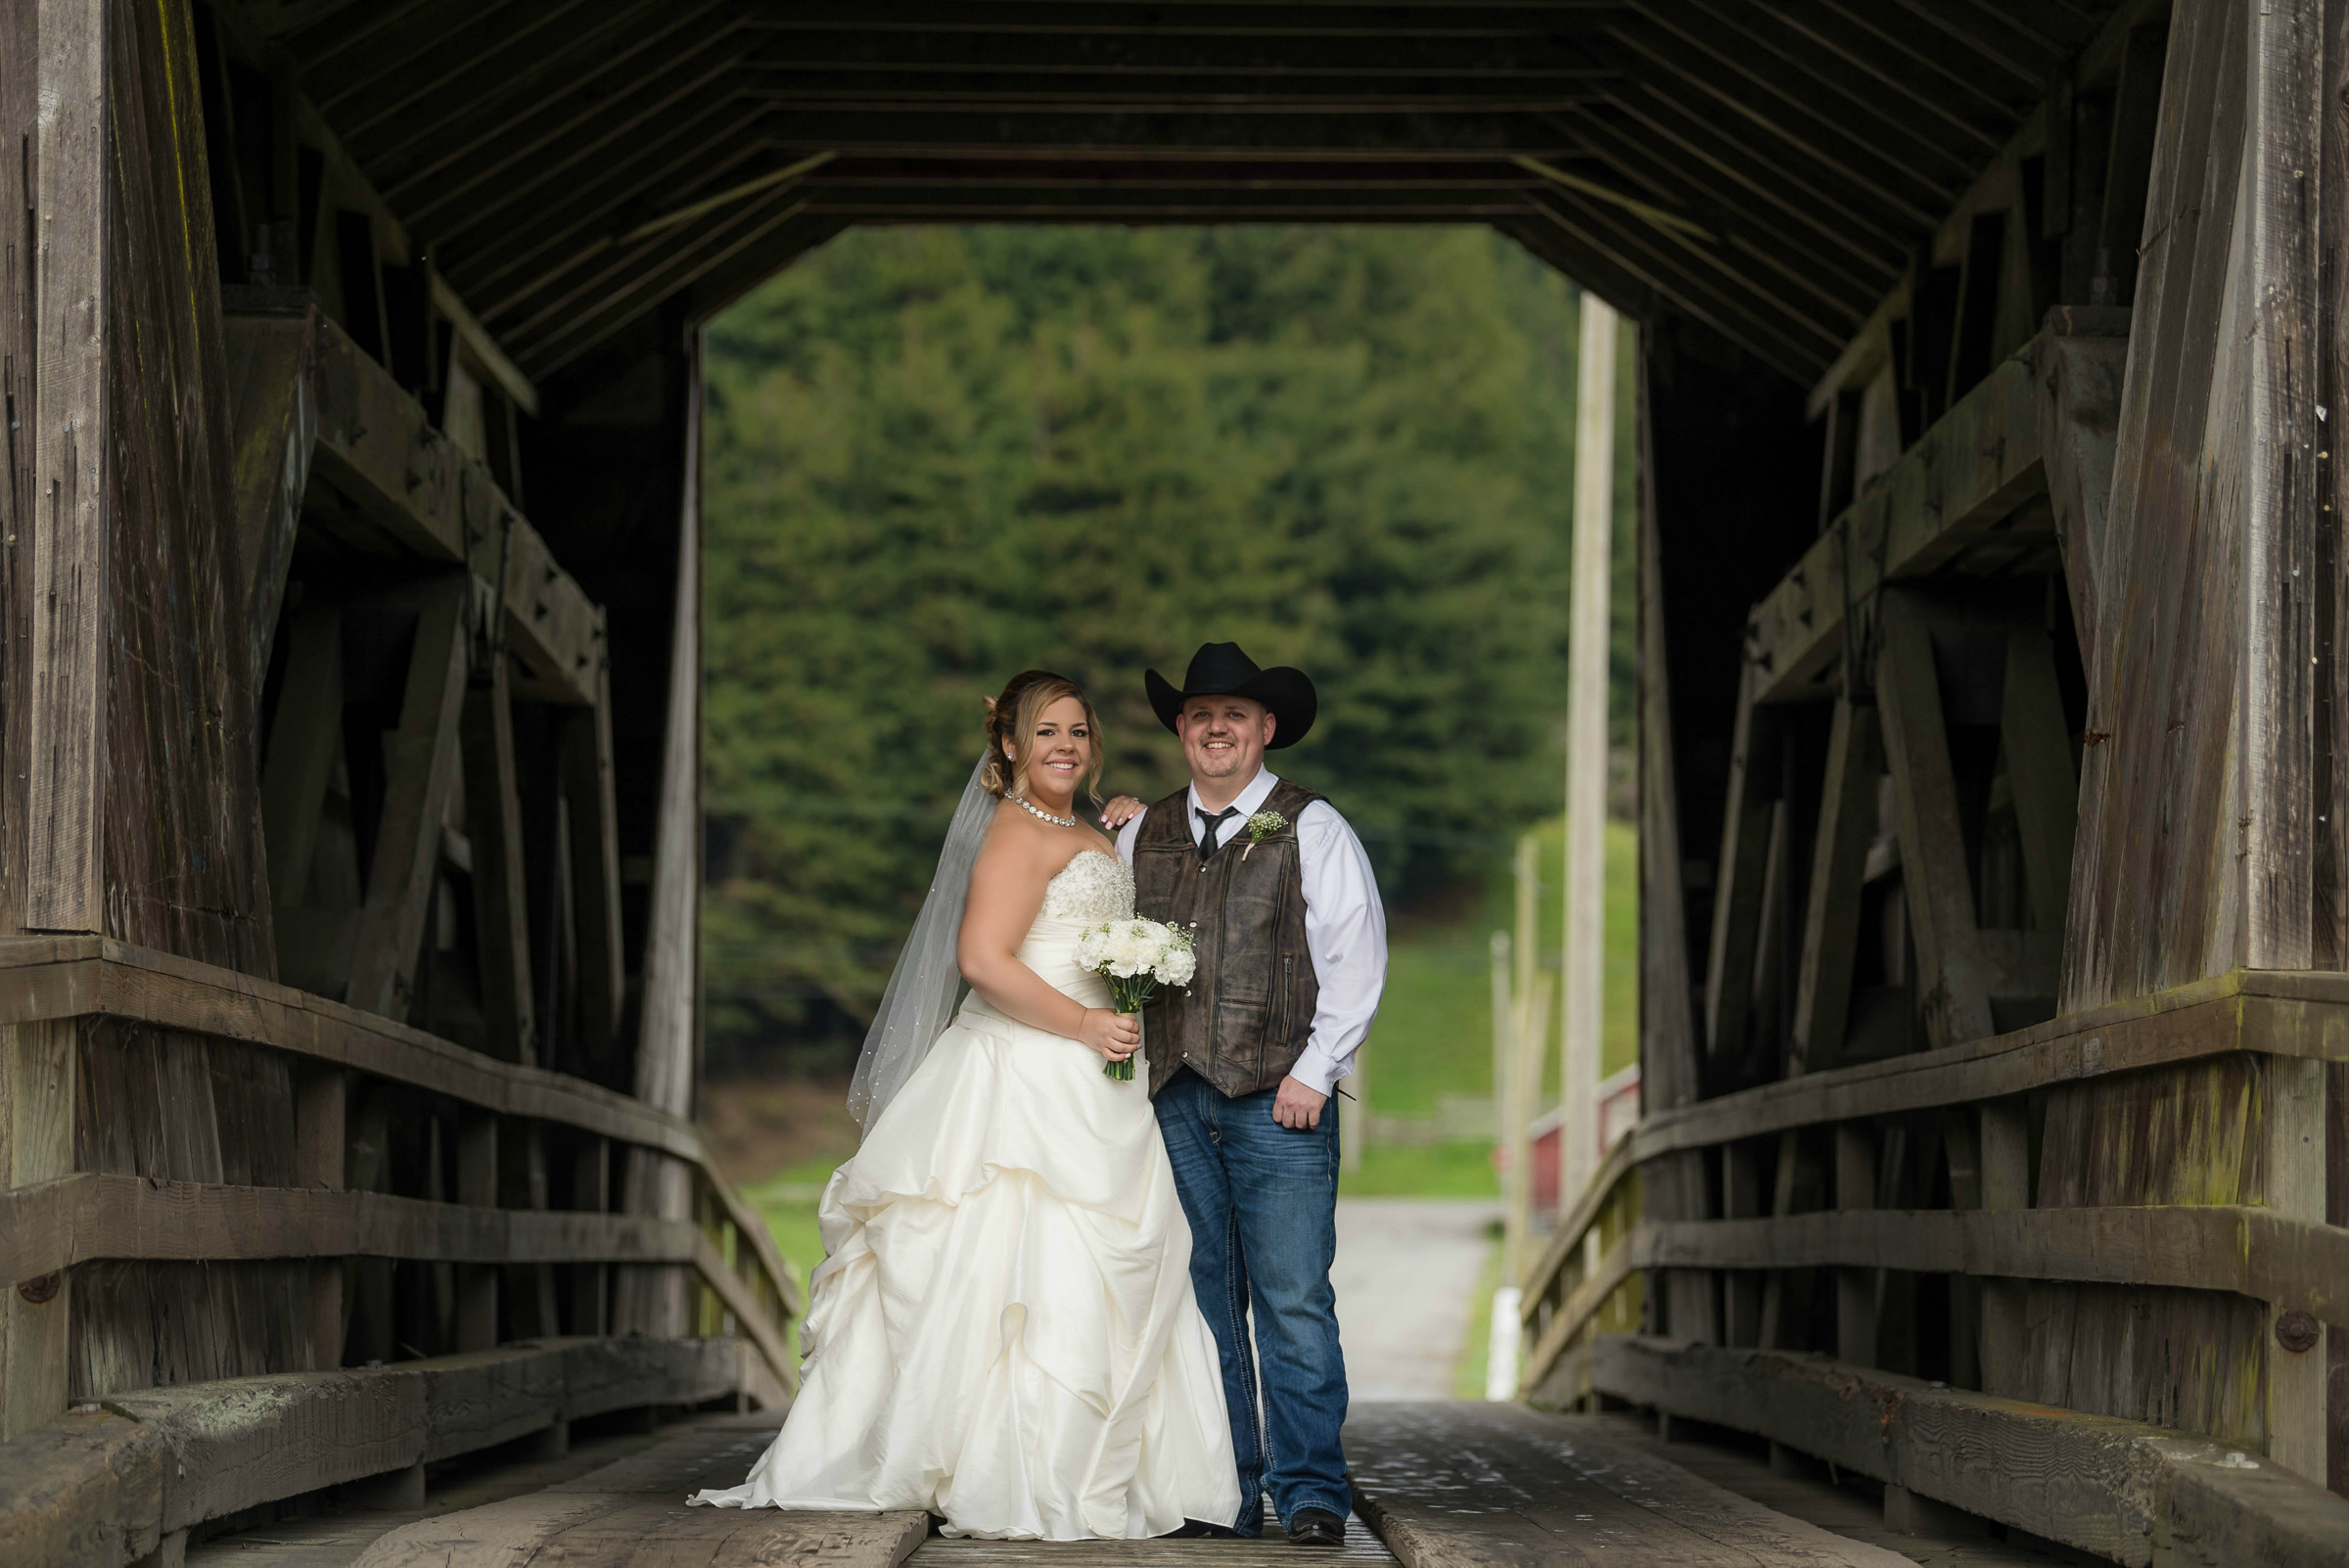  Rob and Nikki's rustic barn wedding on Elk River Road  